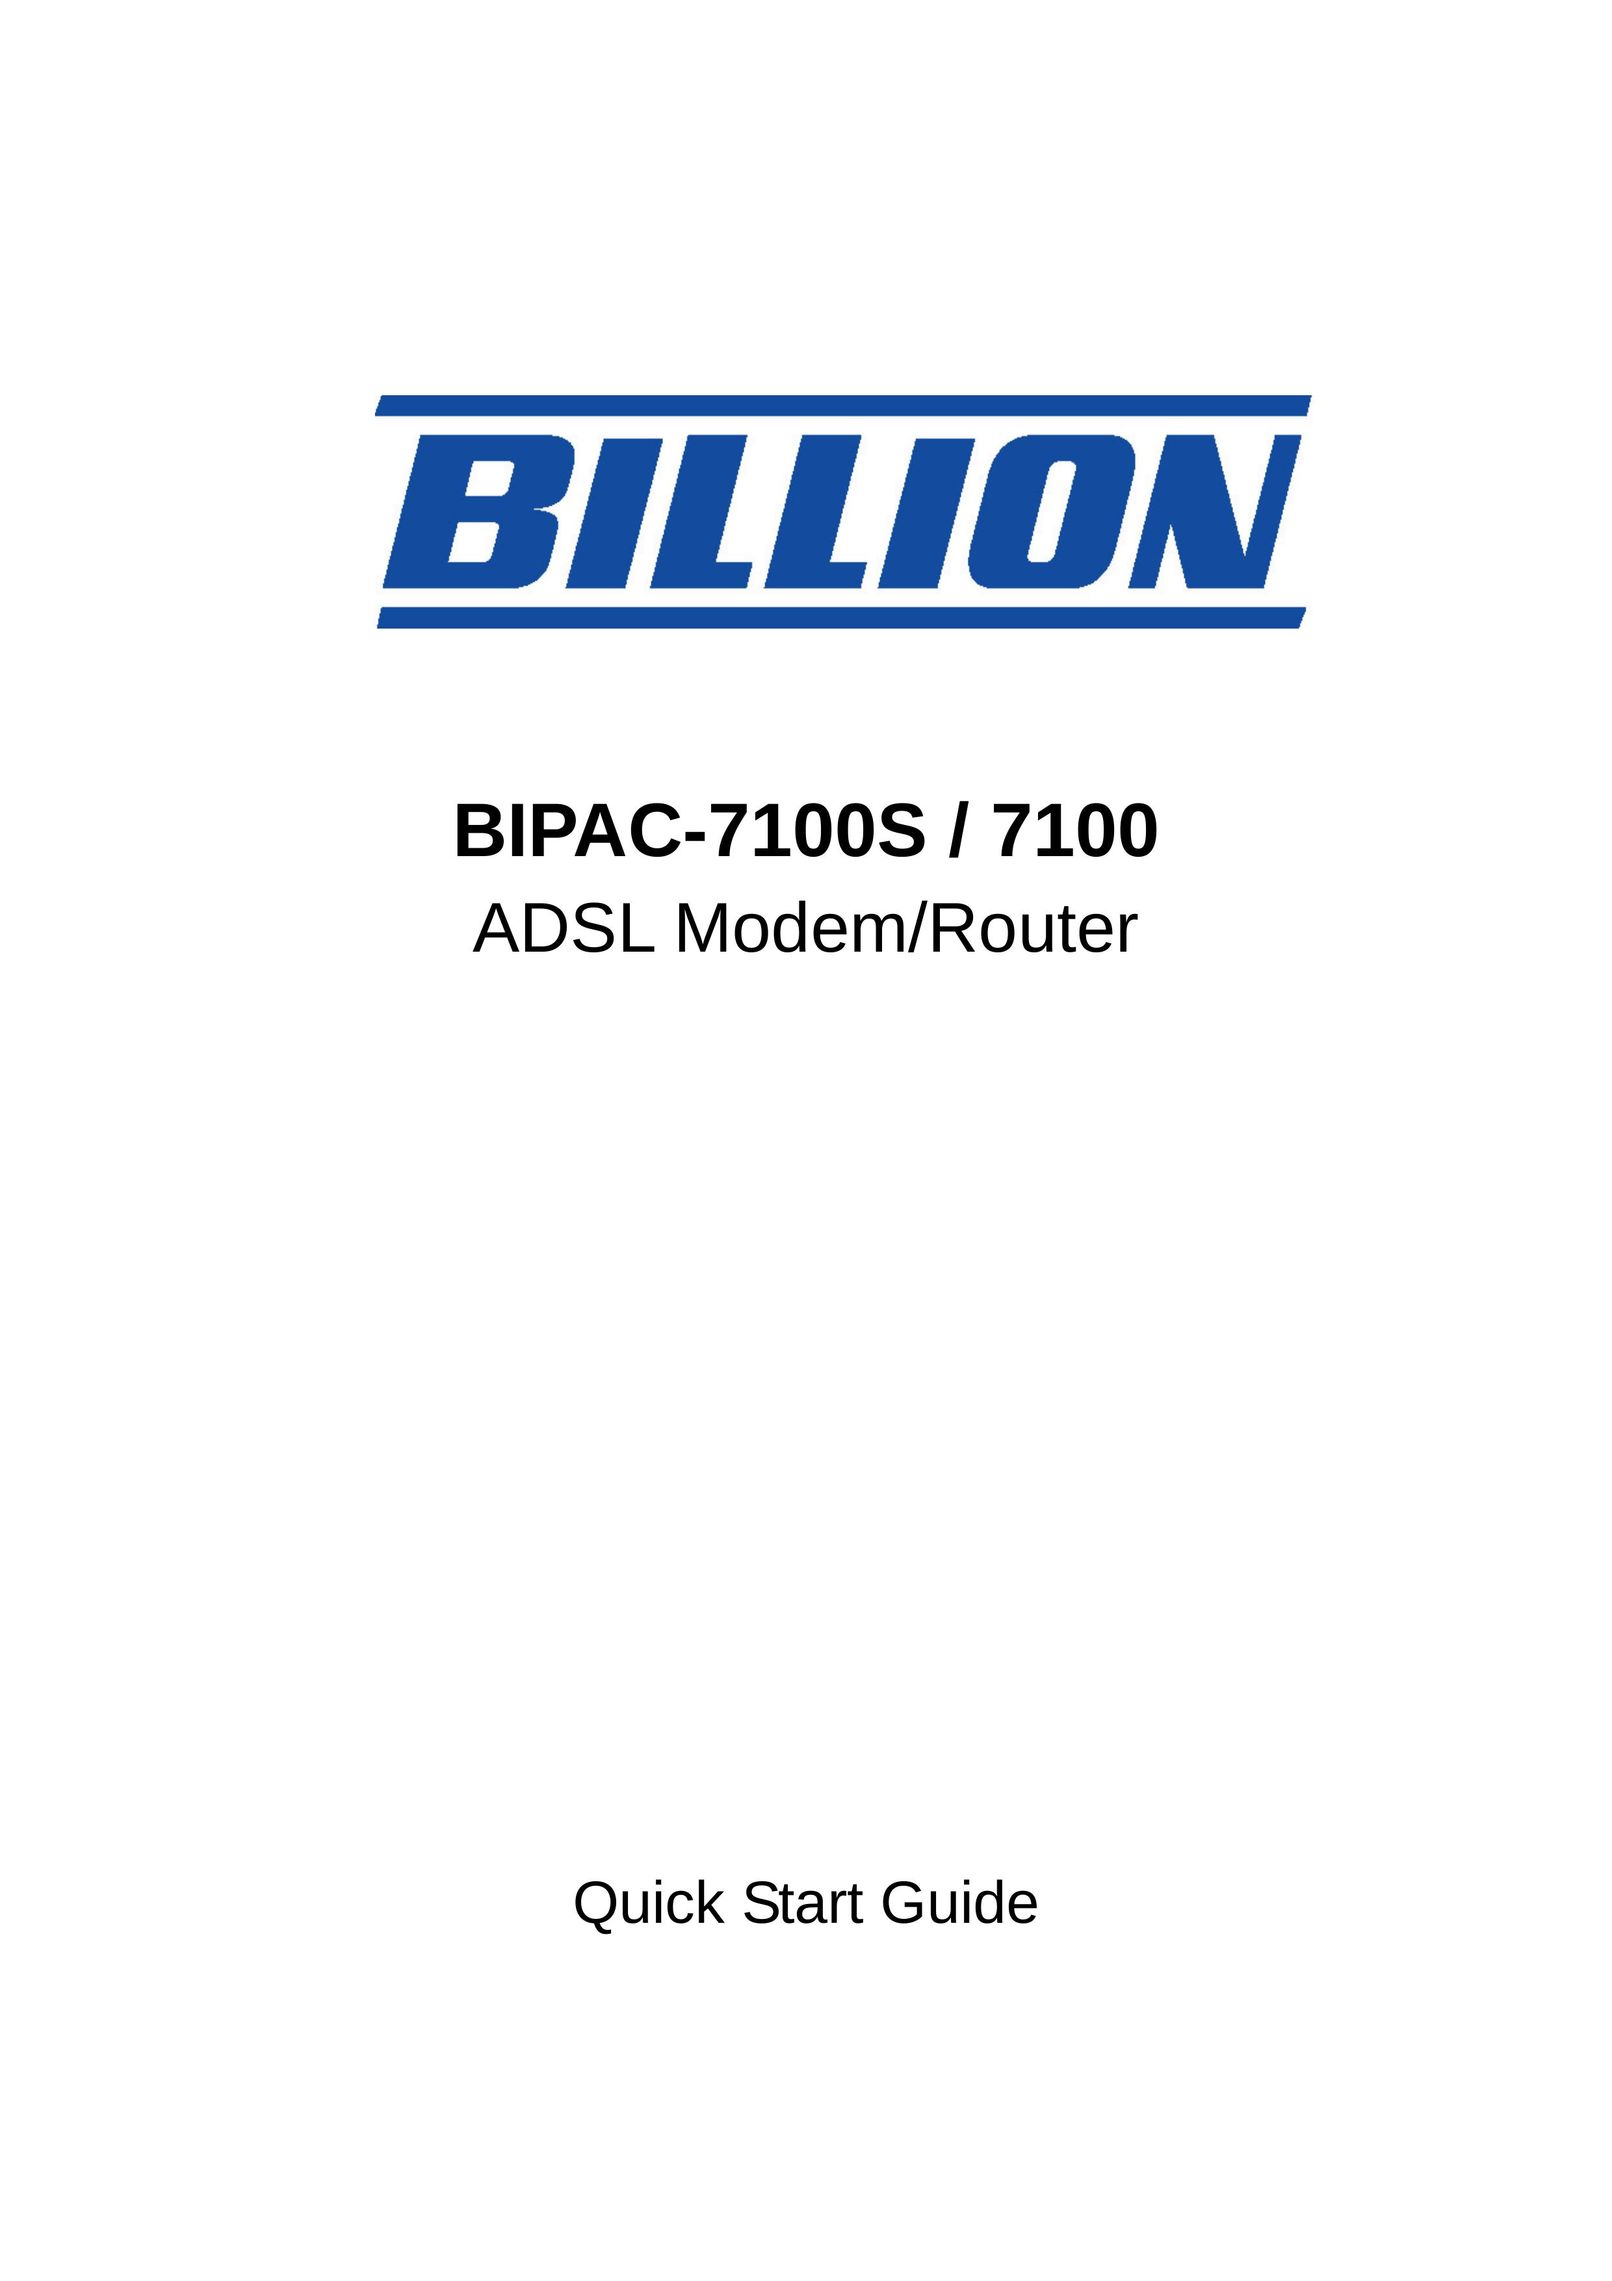 Billion Electric Company BIPAC-7100 Modem User Manual